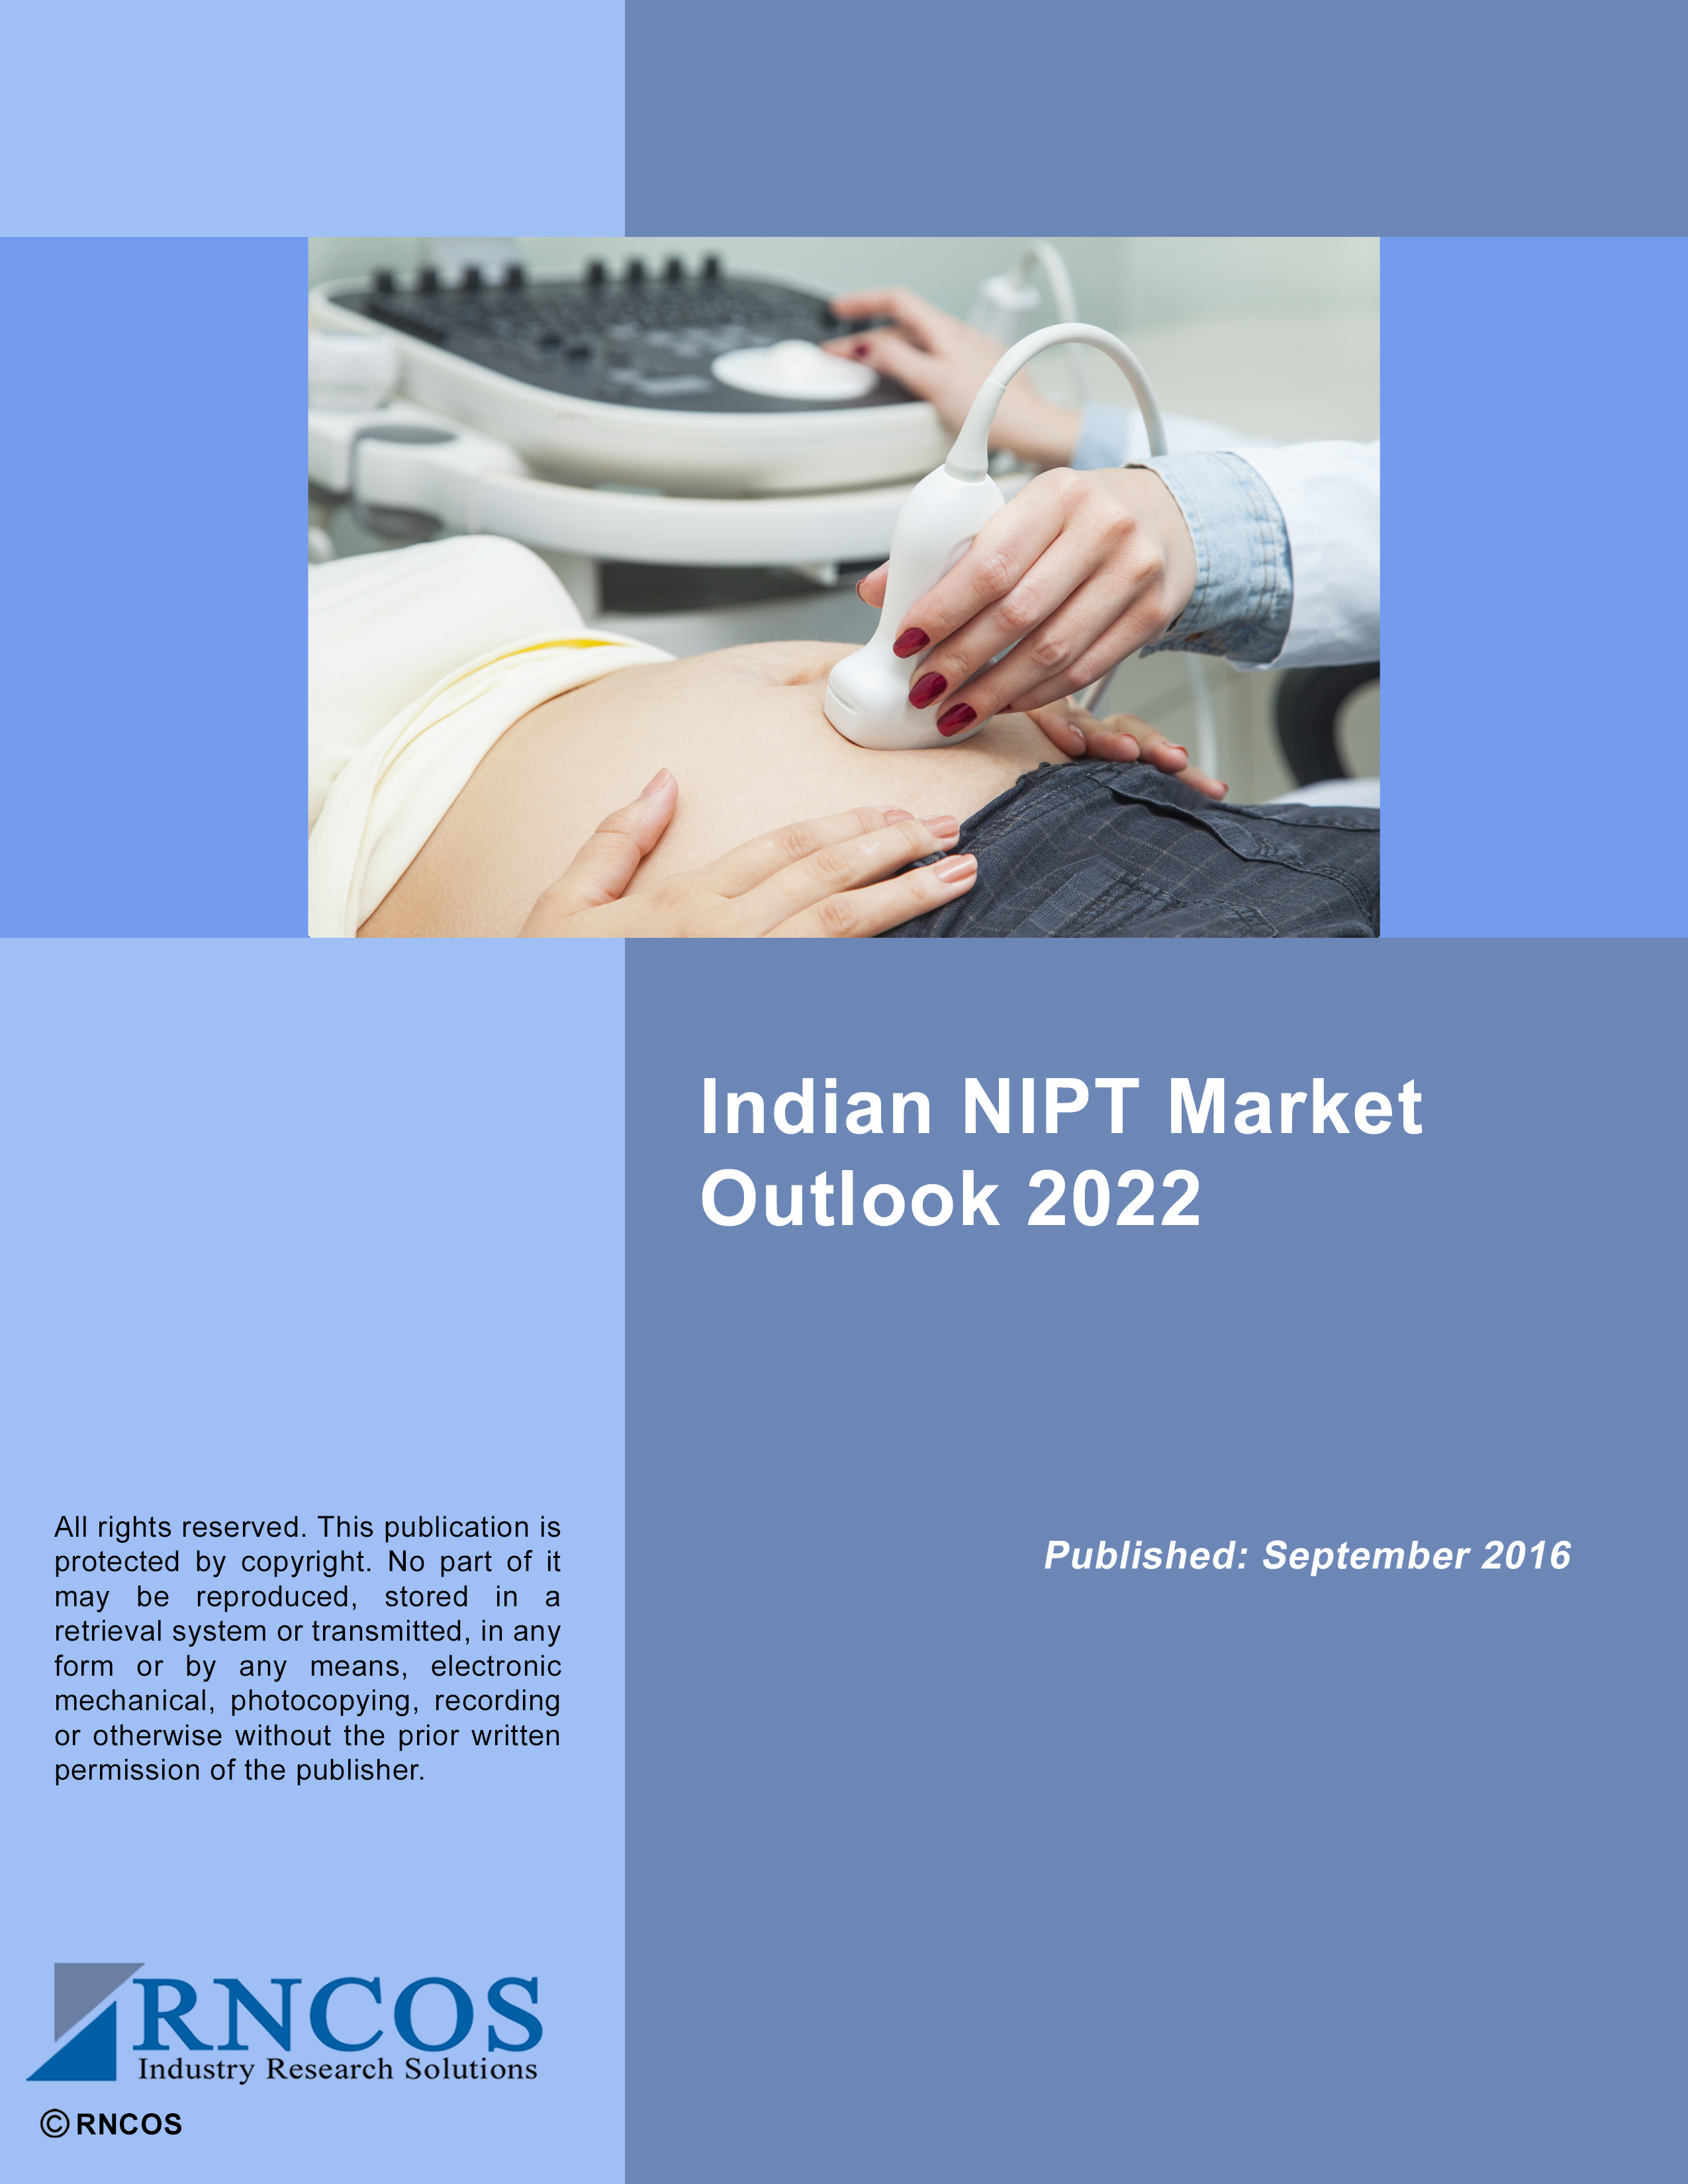 Indian NIPT Market Outlook 2022 Research Report